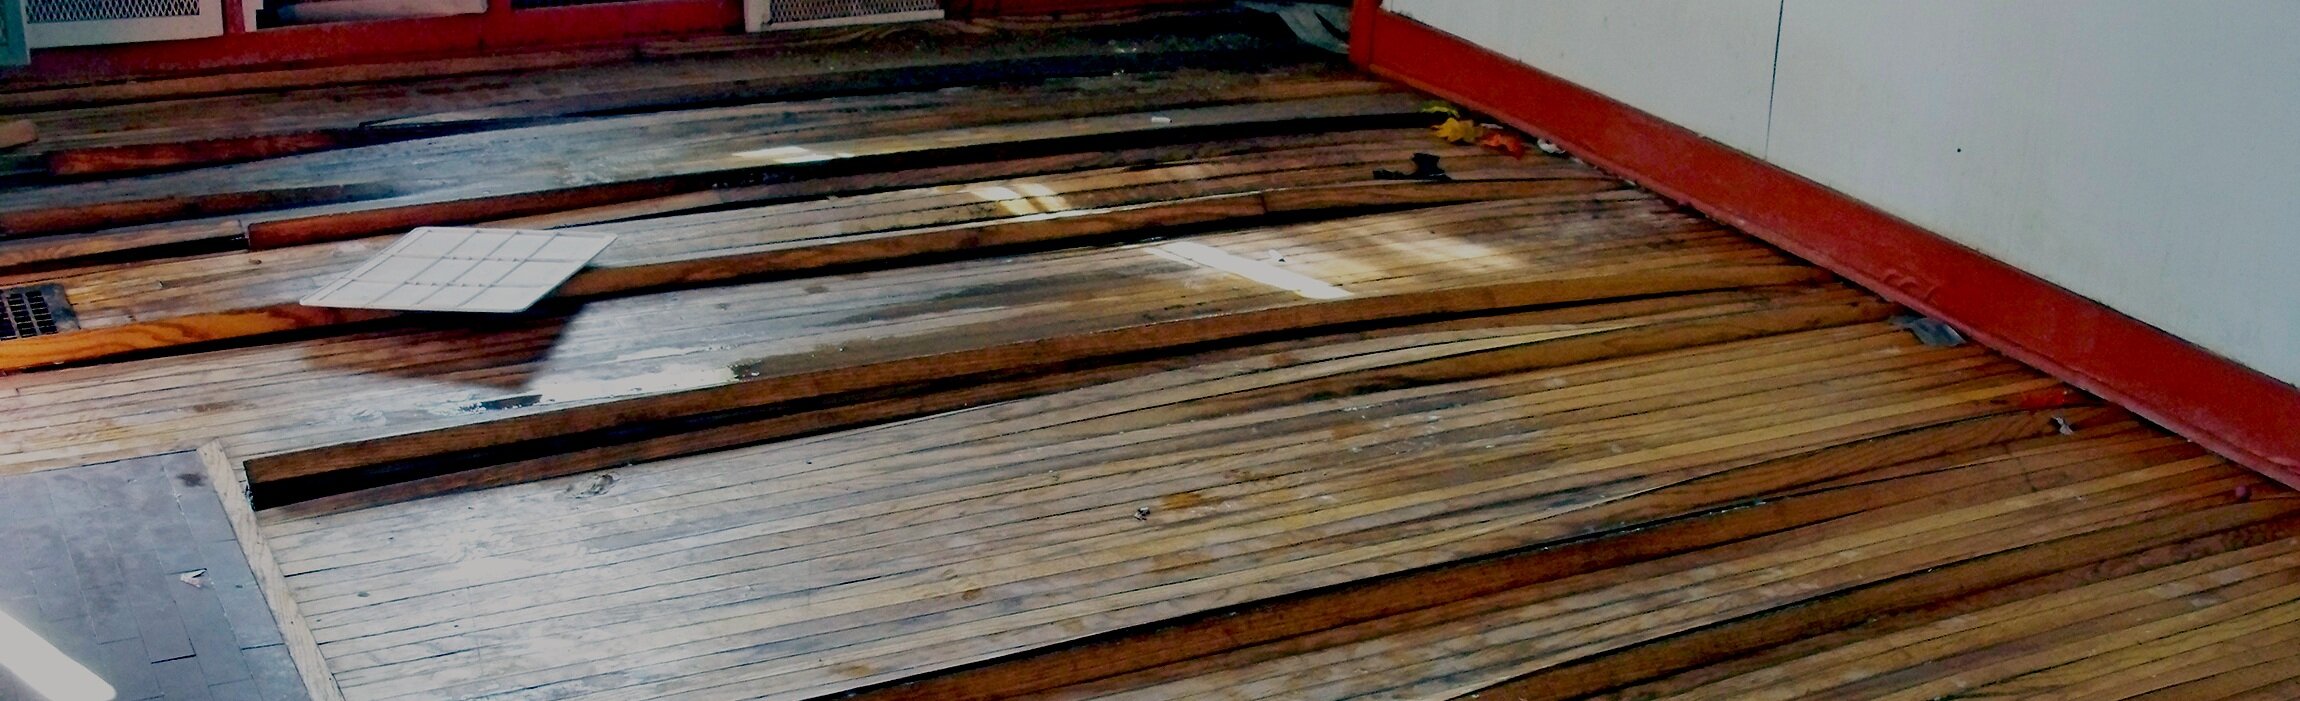 Dryhero Hardwood Floor Drying, Drying Hardwood Floors Water Damage